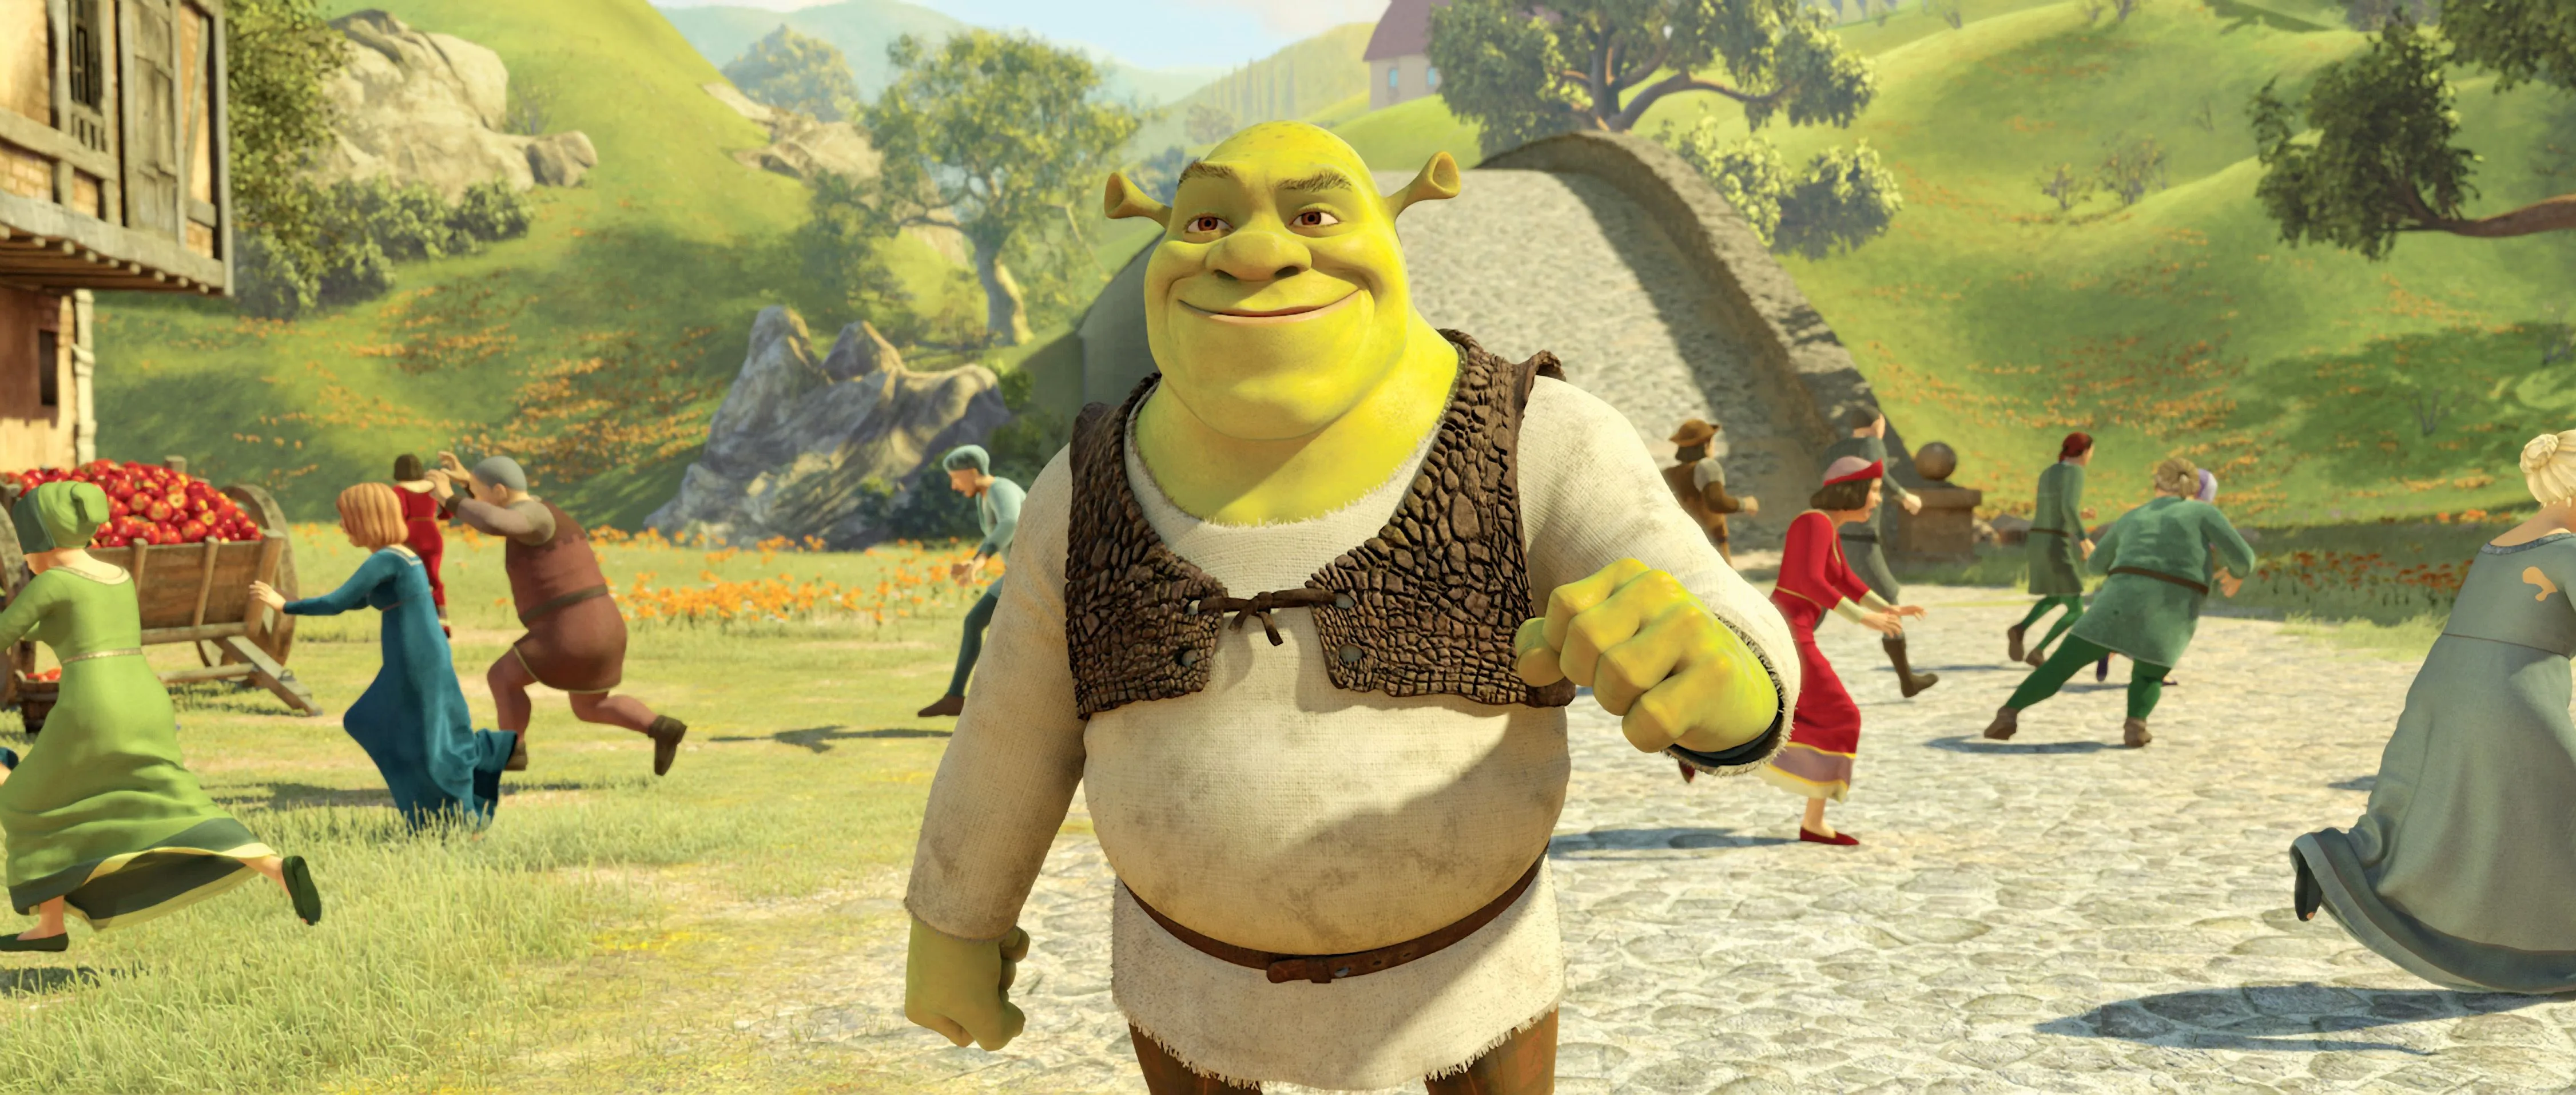 Shrek Theme Song | Movie Theme Songs & TV Soundtracks